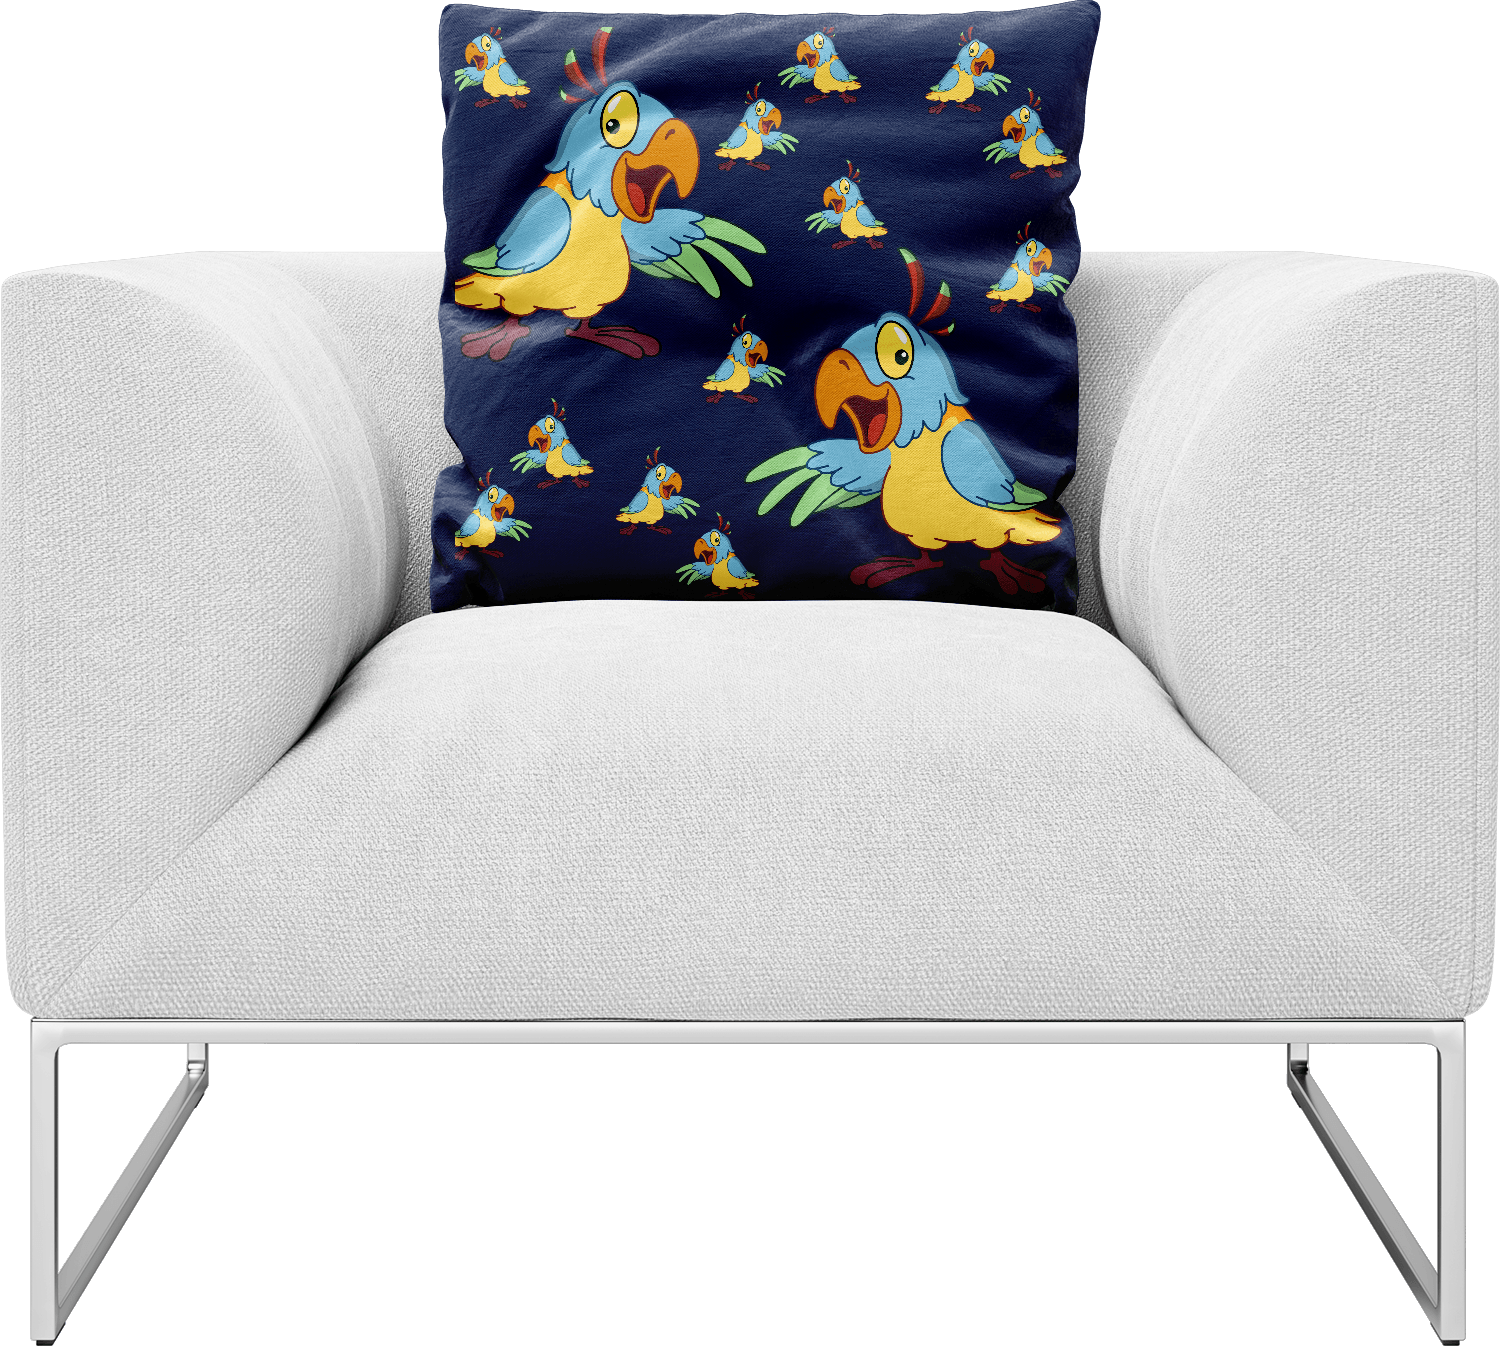 Psycho Parrot Pillows Cushions - fungear.com.au